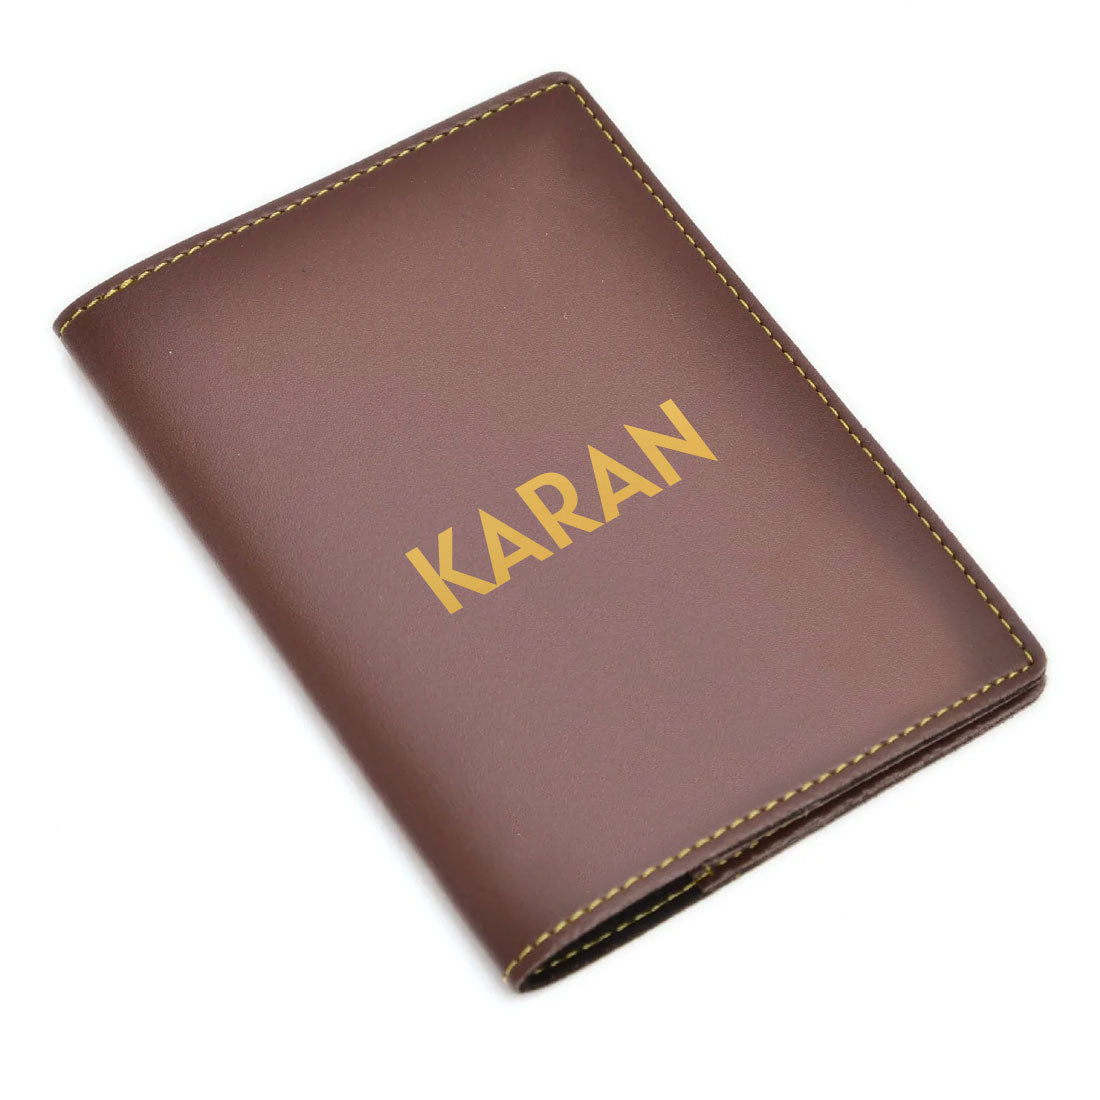 Personalized Vegan Leather Passport Holder for Men & Women - Add Name